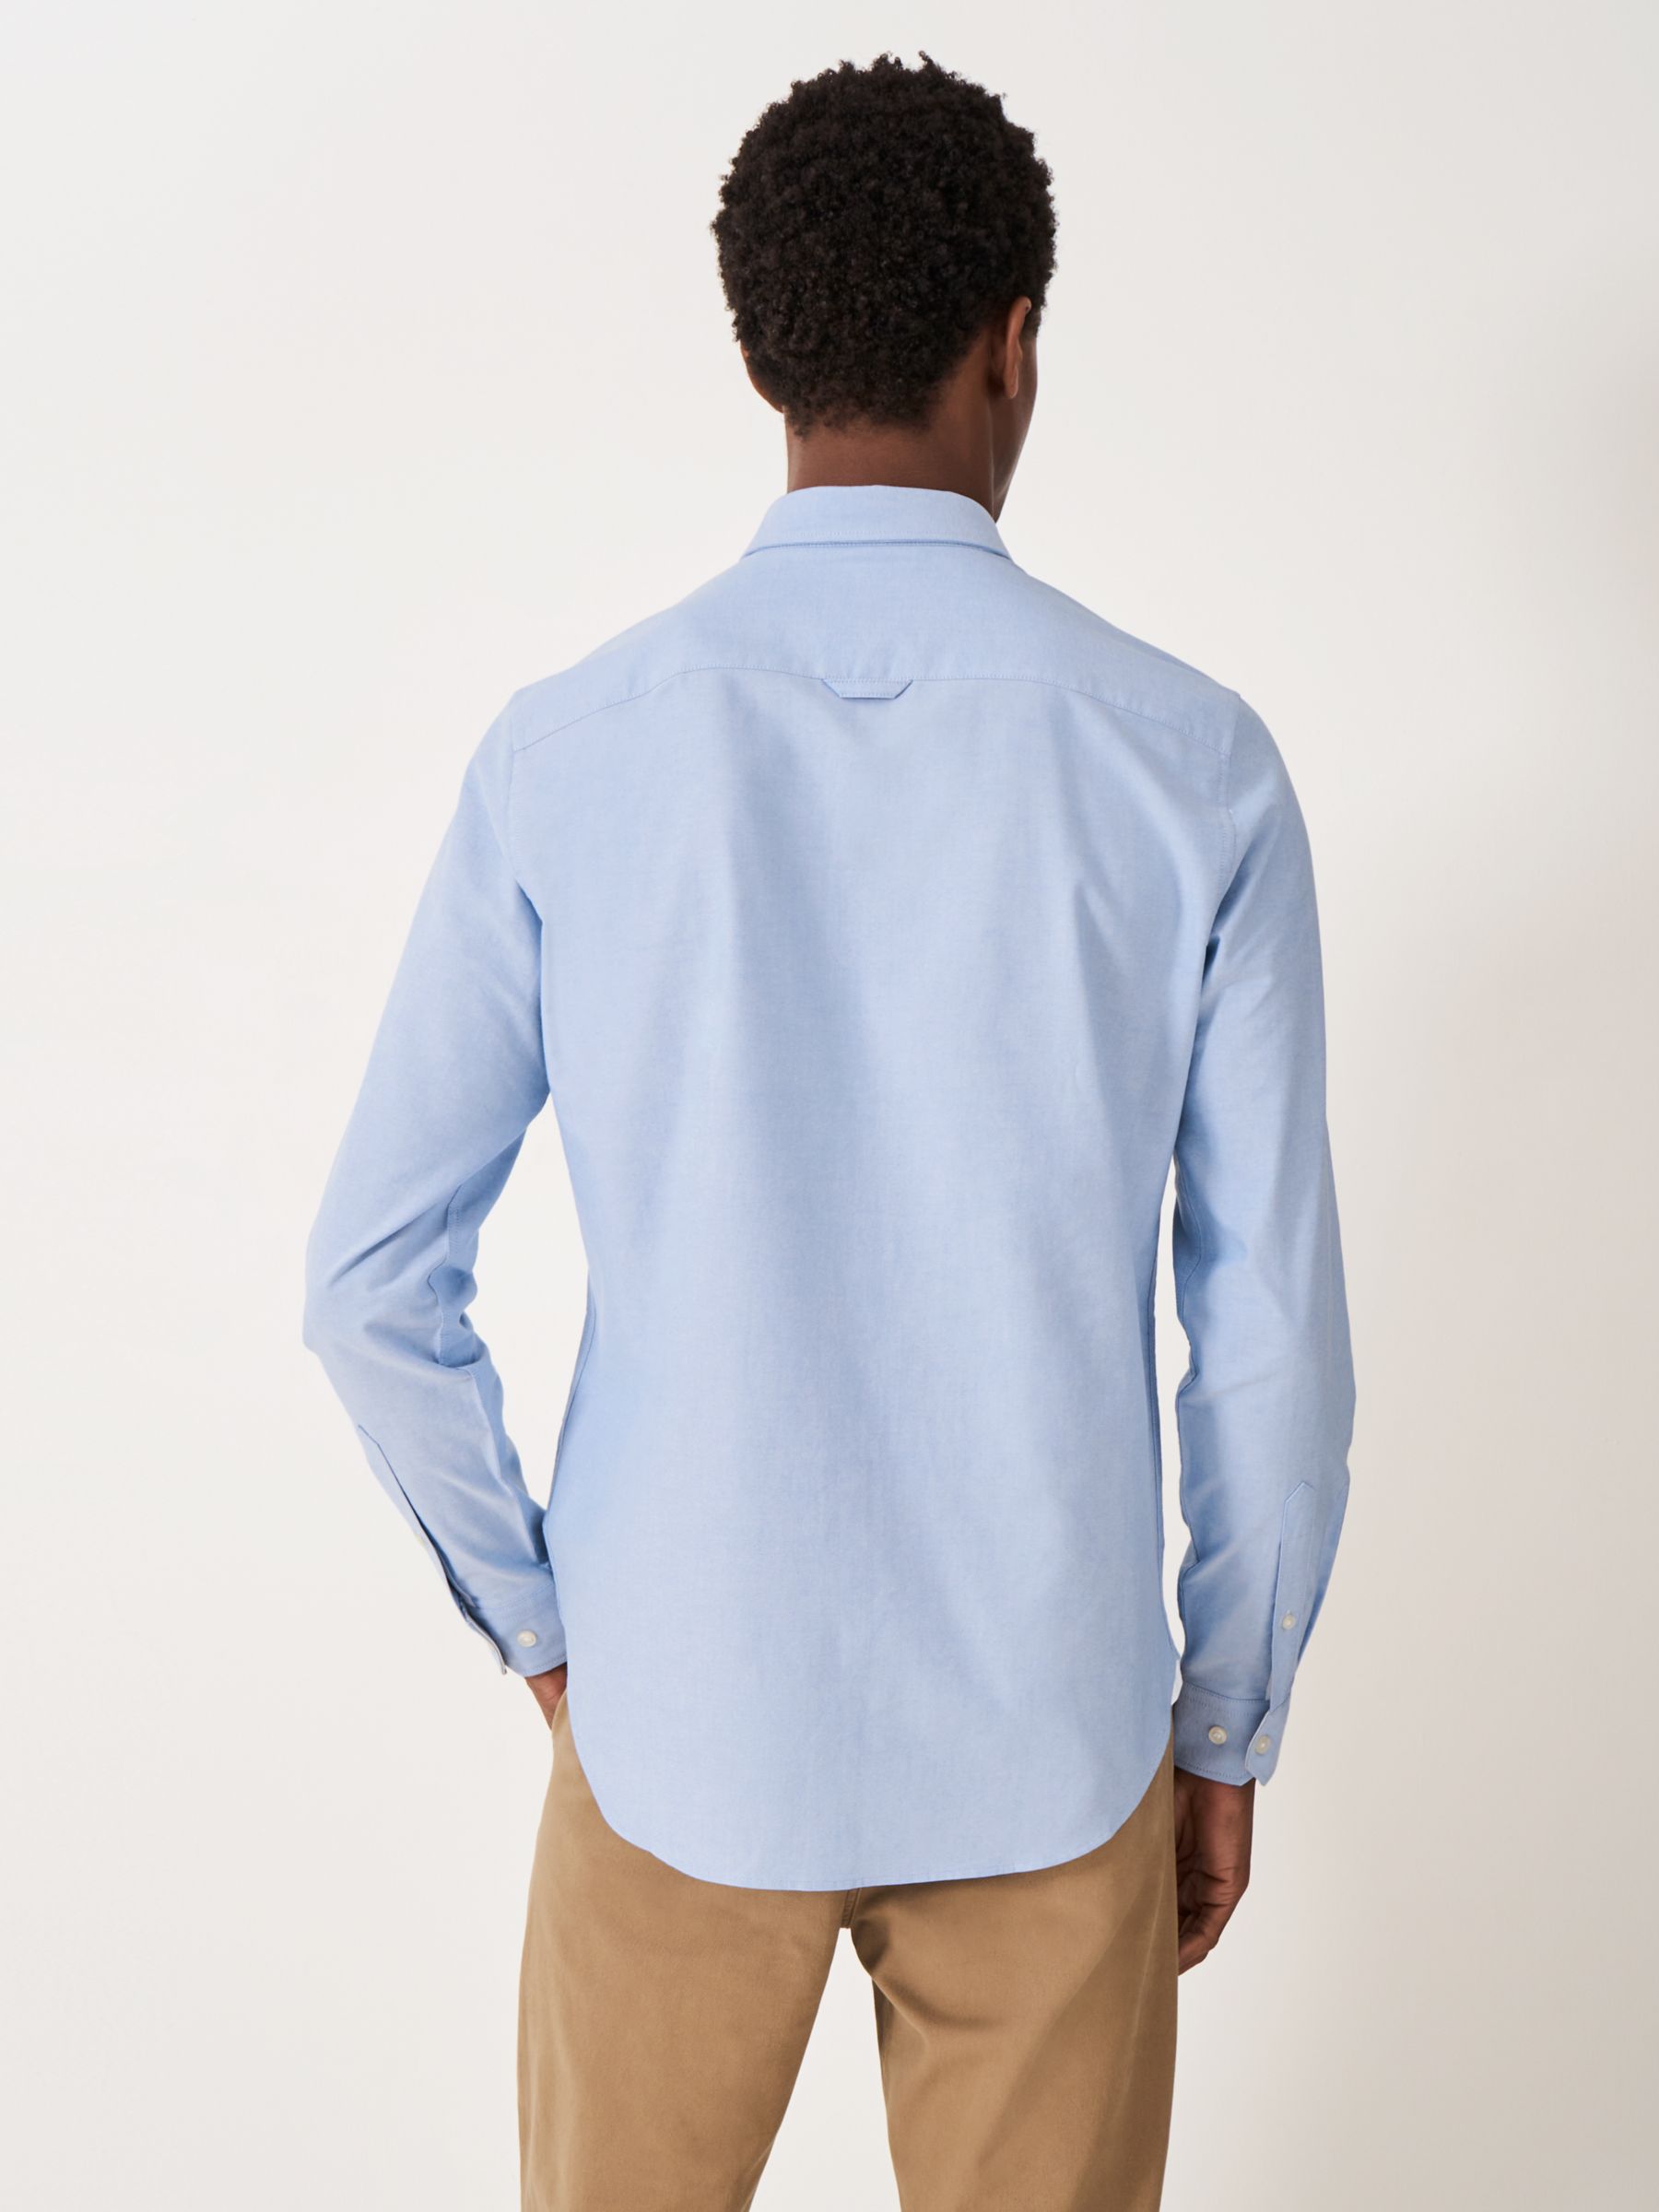 Crew Clothing Slim Fit Oxford Shirt, Light Blue, L